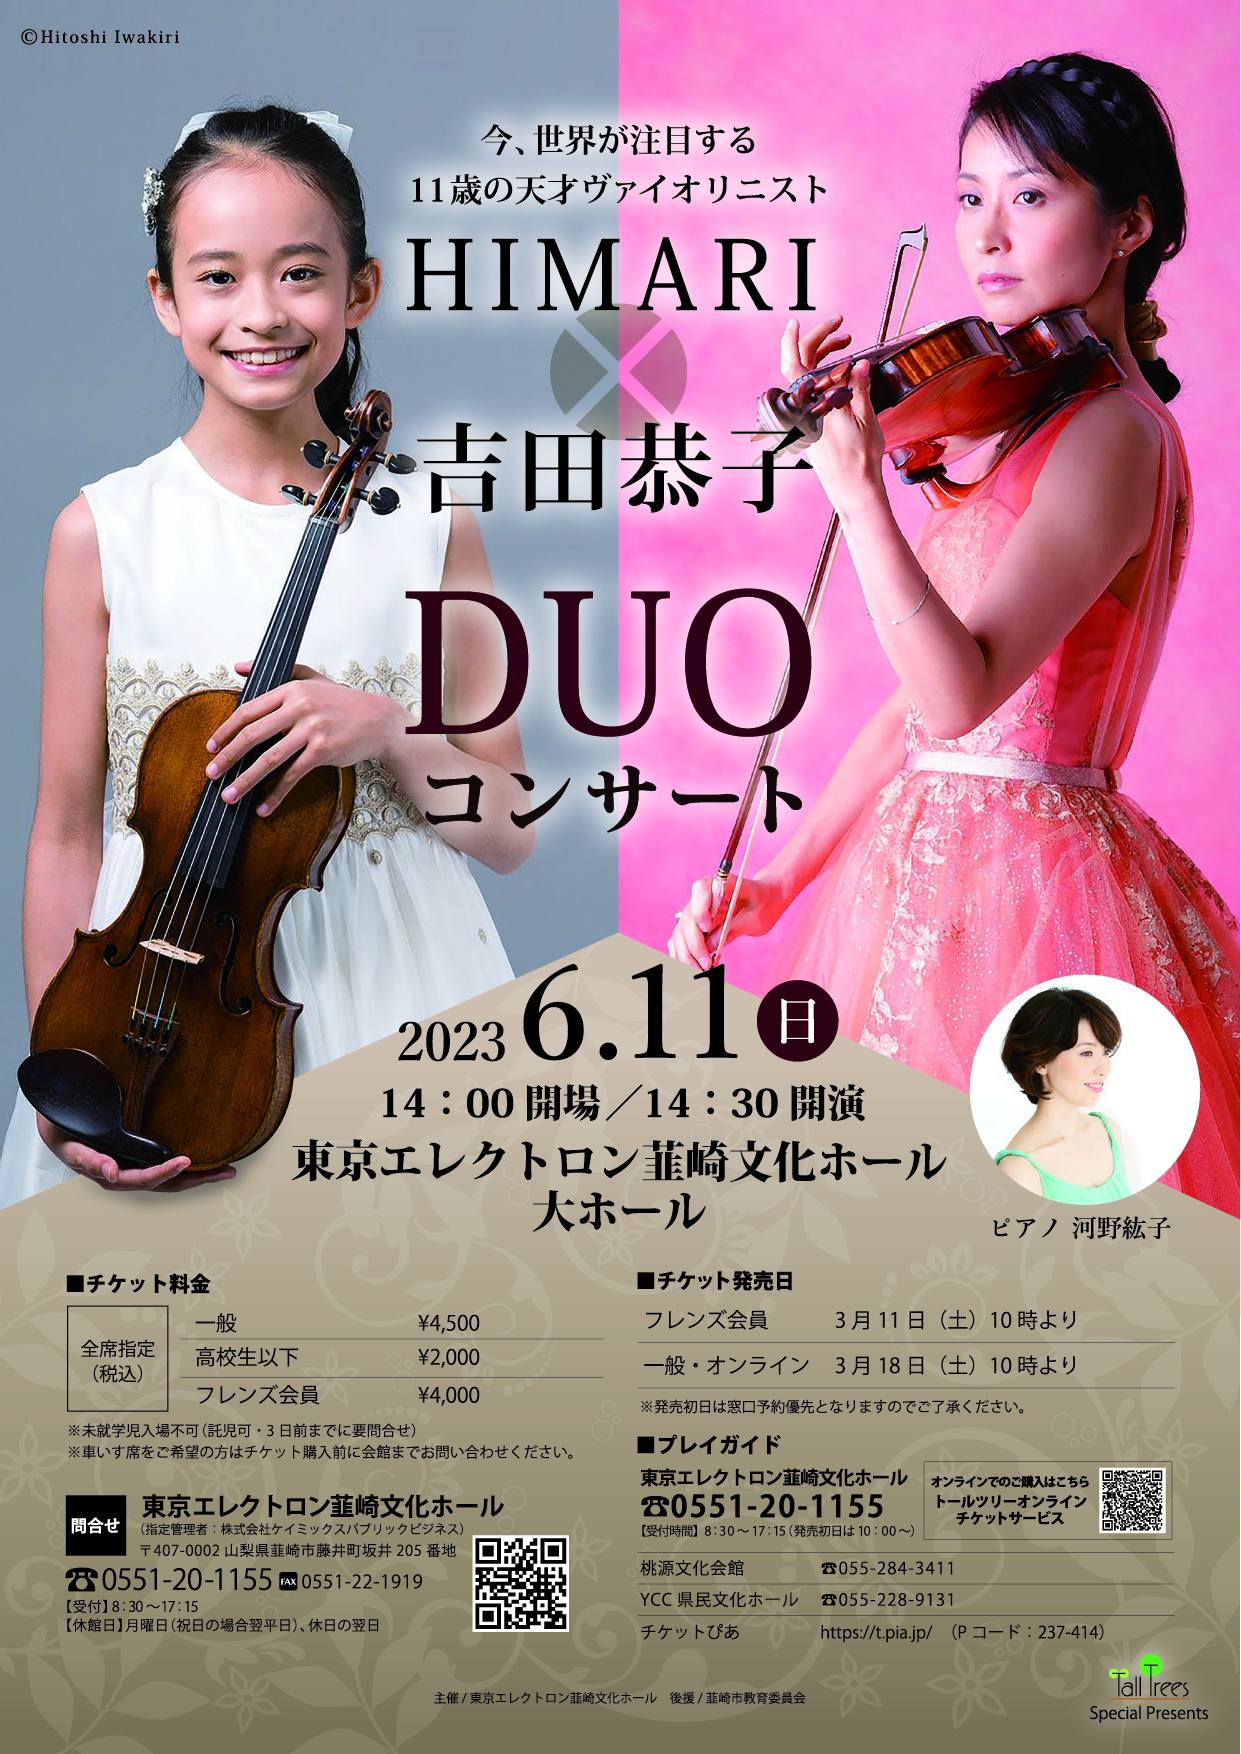 HIMARI x Kyoko Yoshida DUO Concert